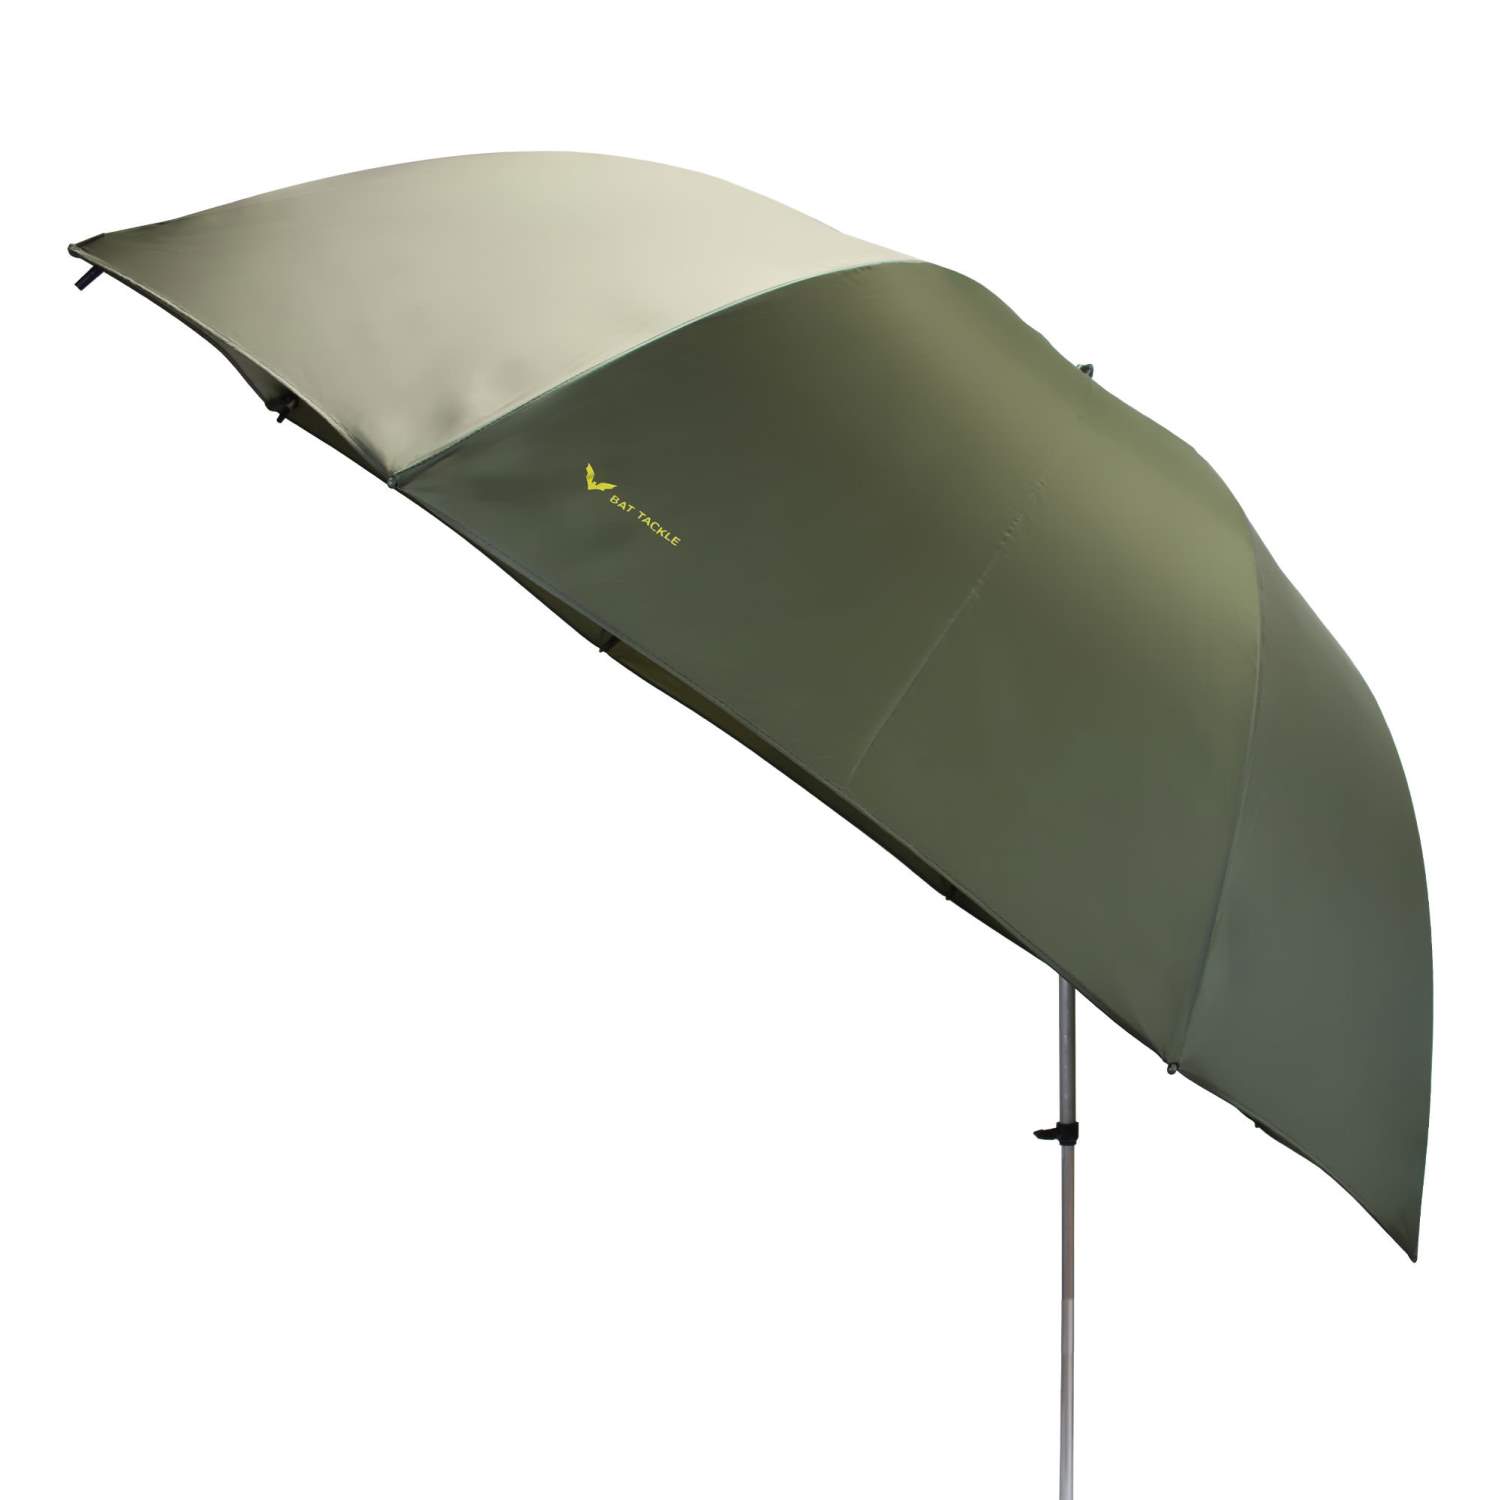 Nubrolly PVC Angelschirm 2,50m Angel Regenschirm Angler Schirmzelt Brolly Schirm